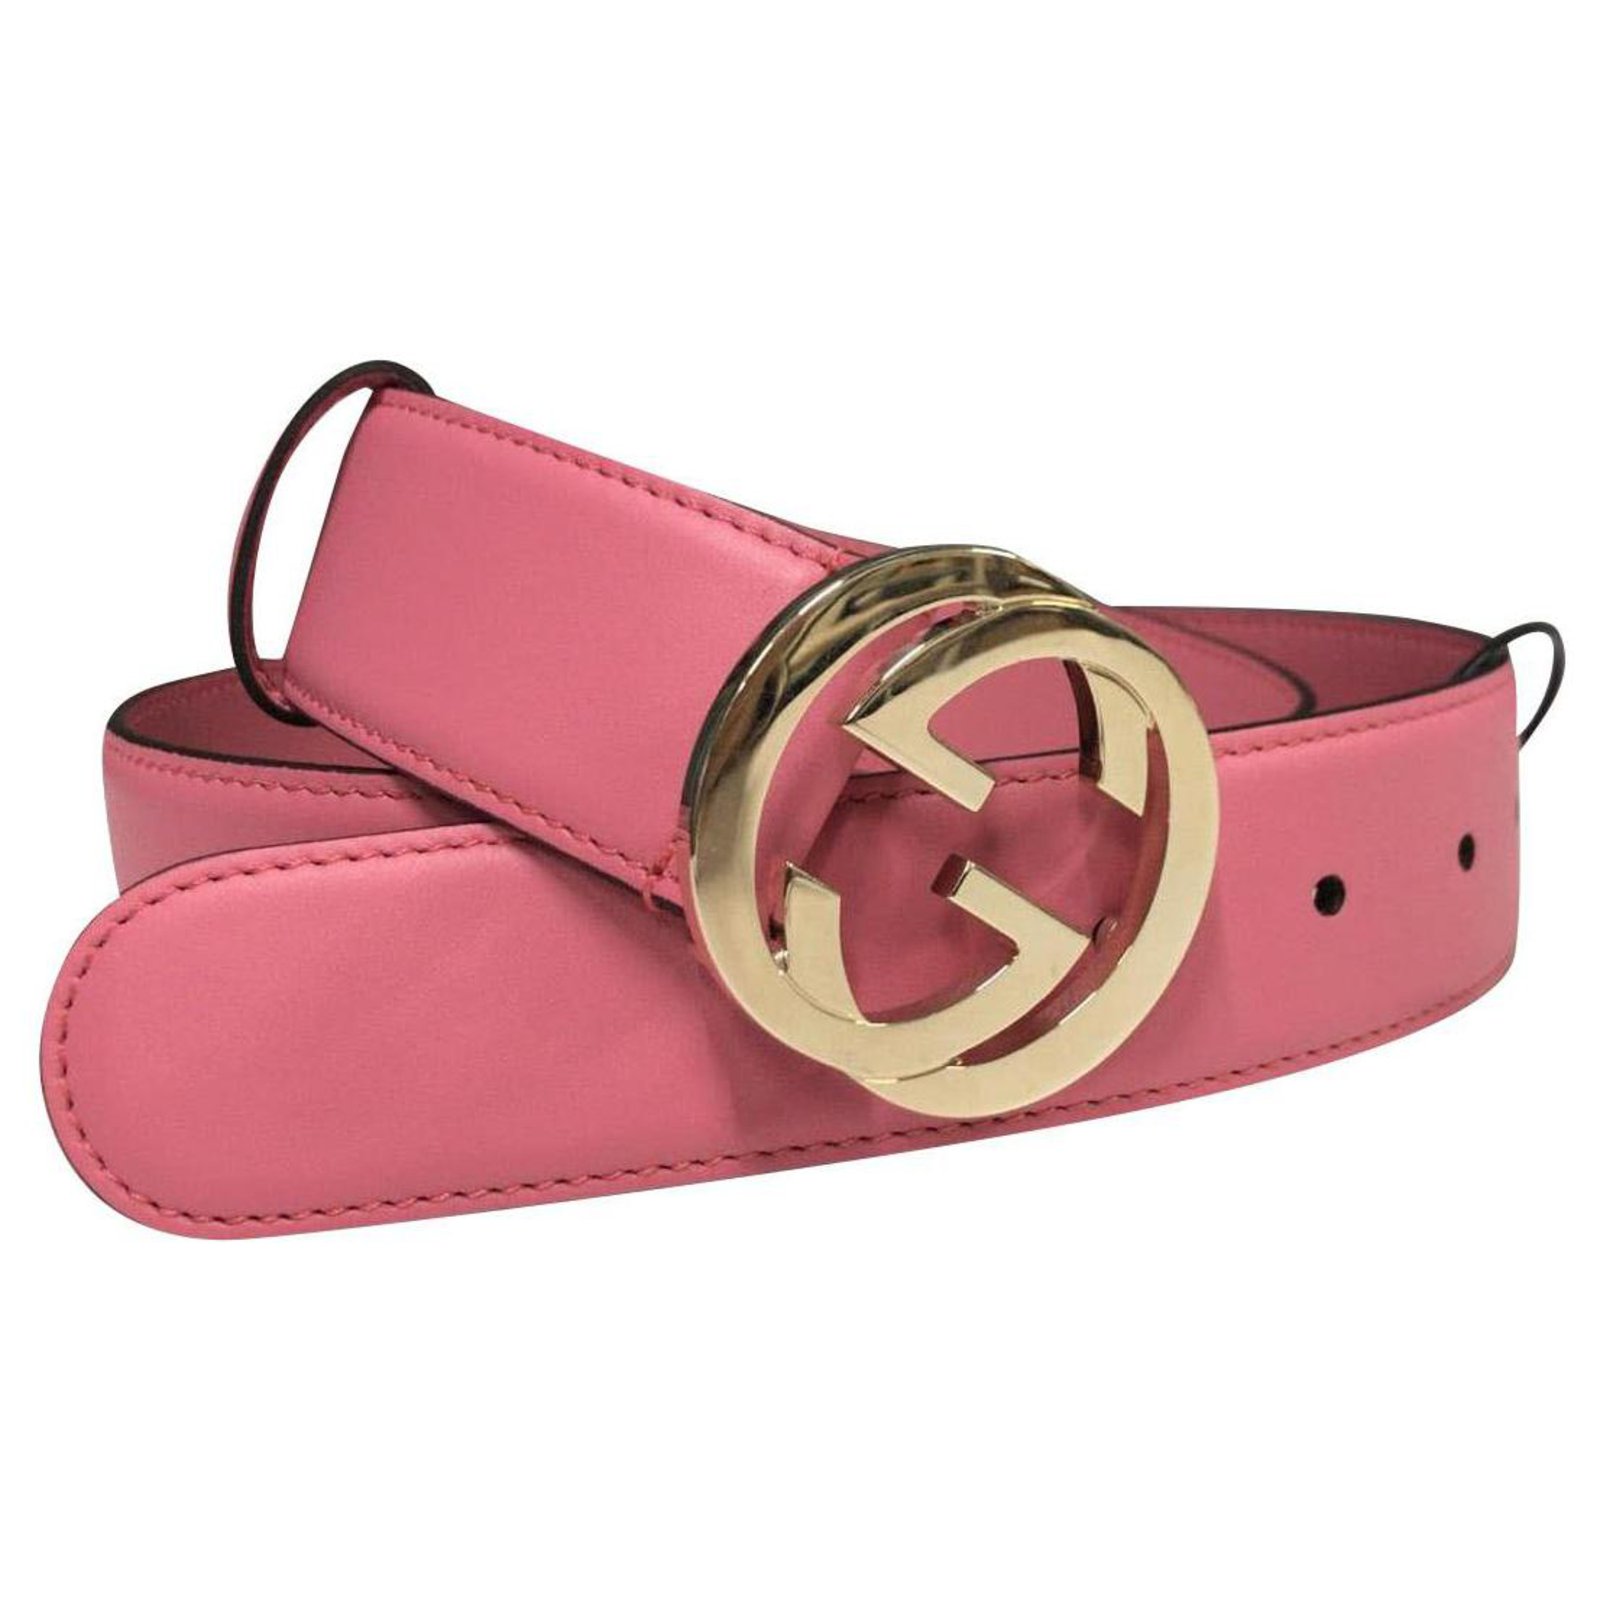 Gucci BELT GUCCI IN PINK LEATHER Belts 